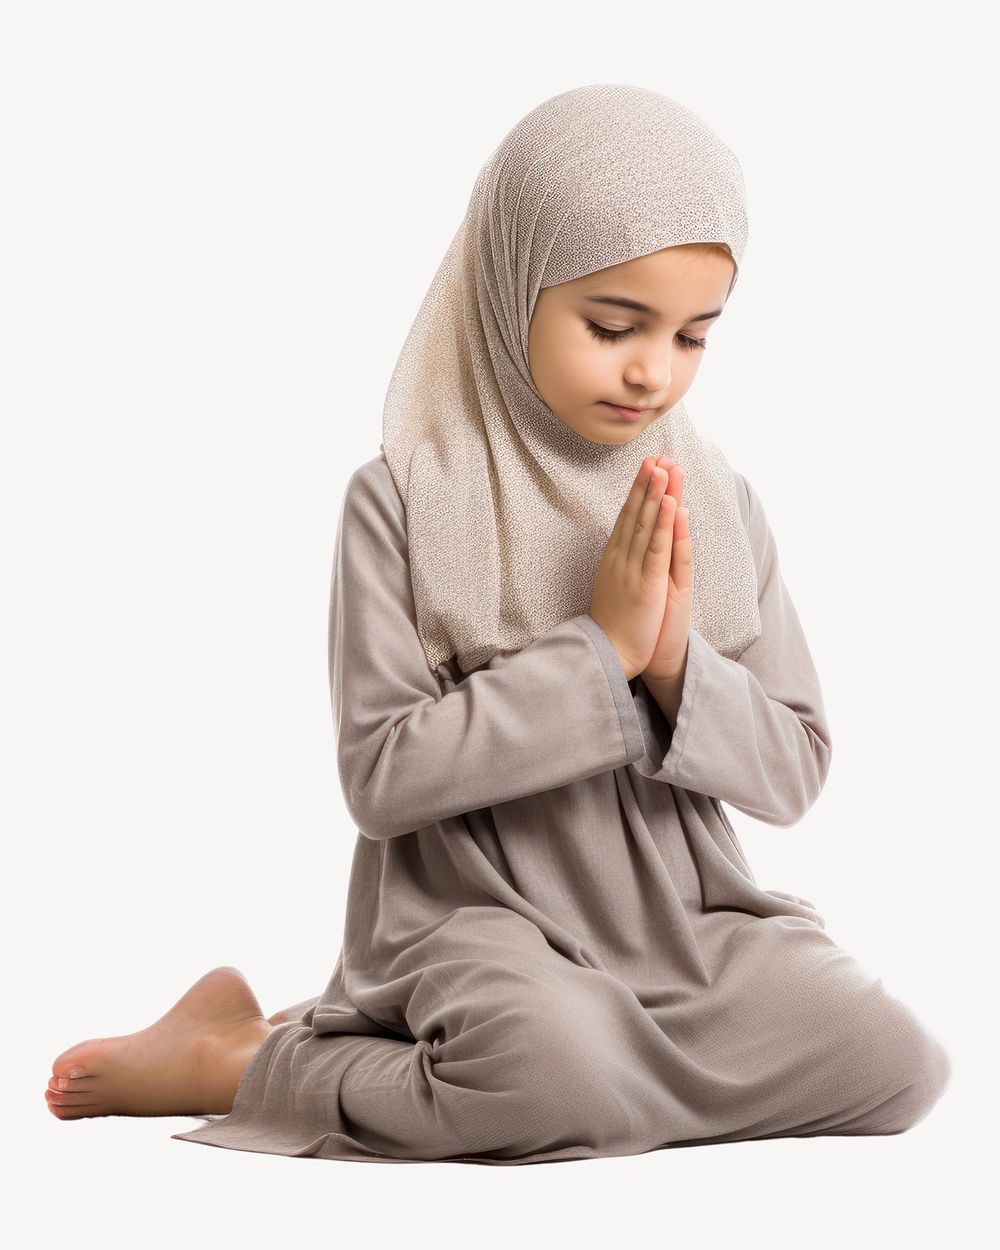 Praying sitting adult white background. 